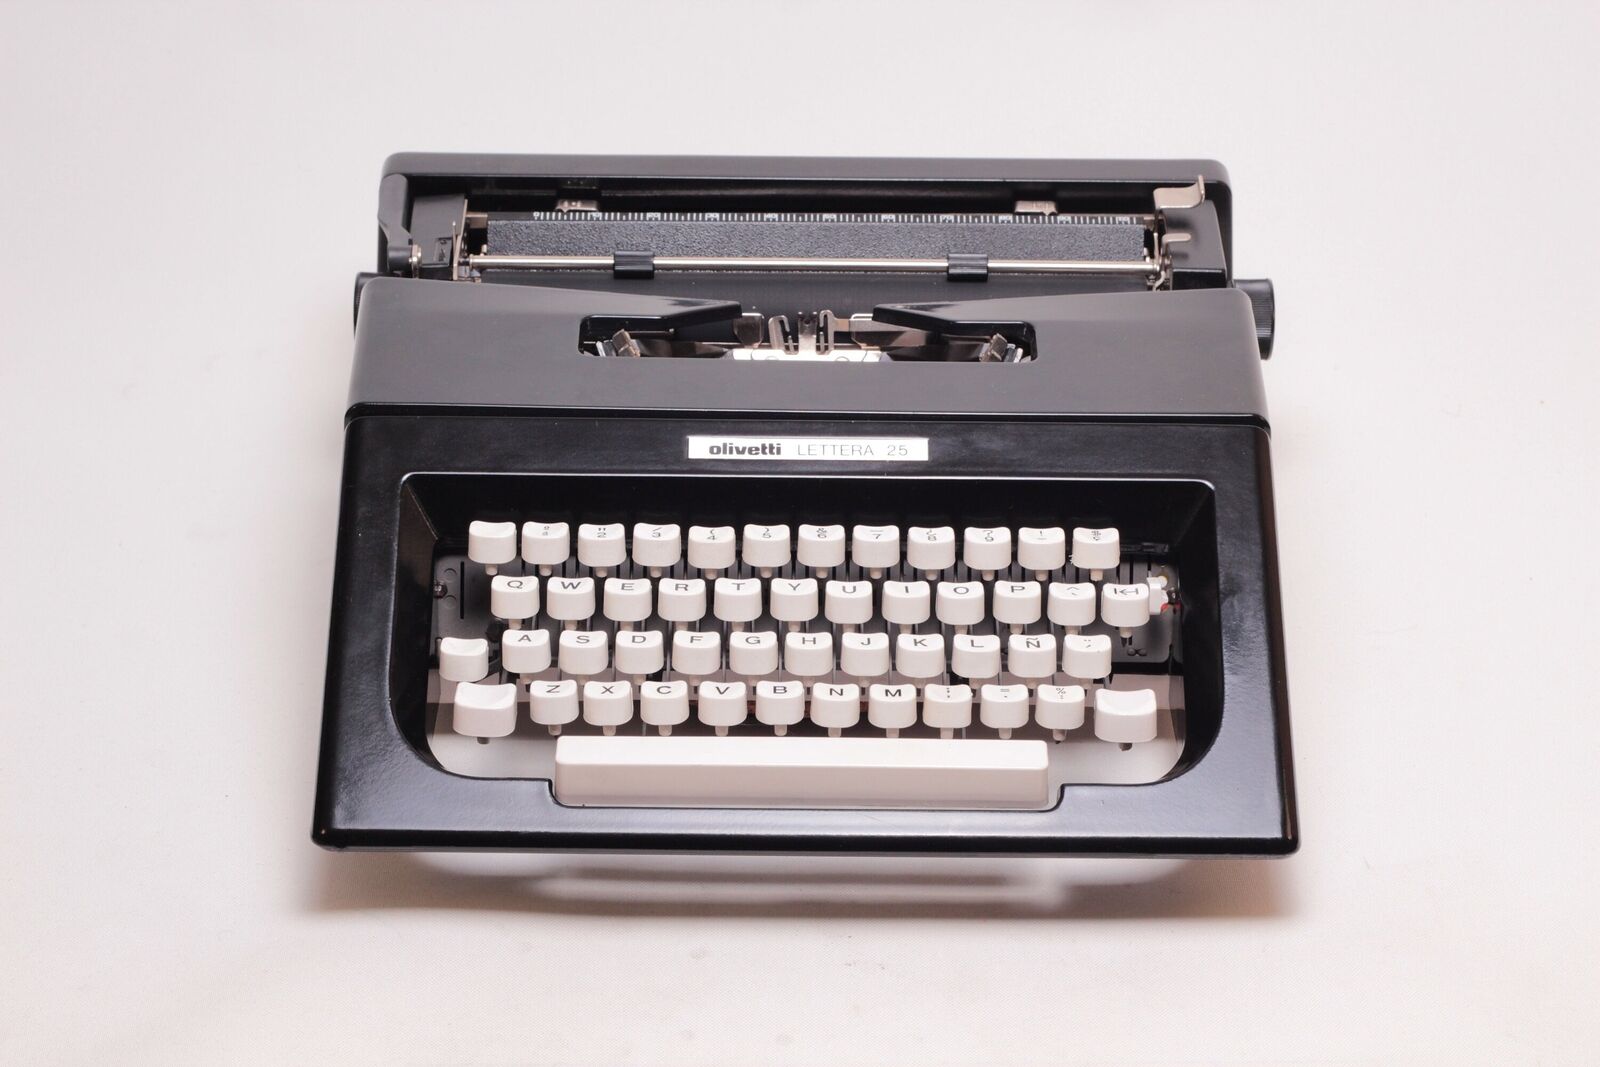 SALE - Lettera 25 Black Typewriter, Vintage, Professionally Serviced